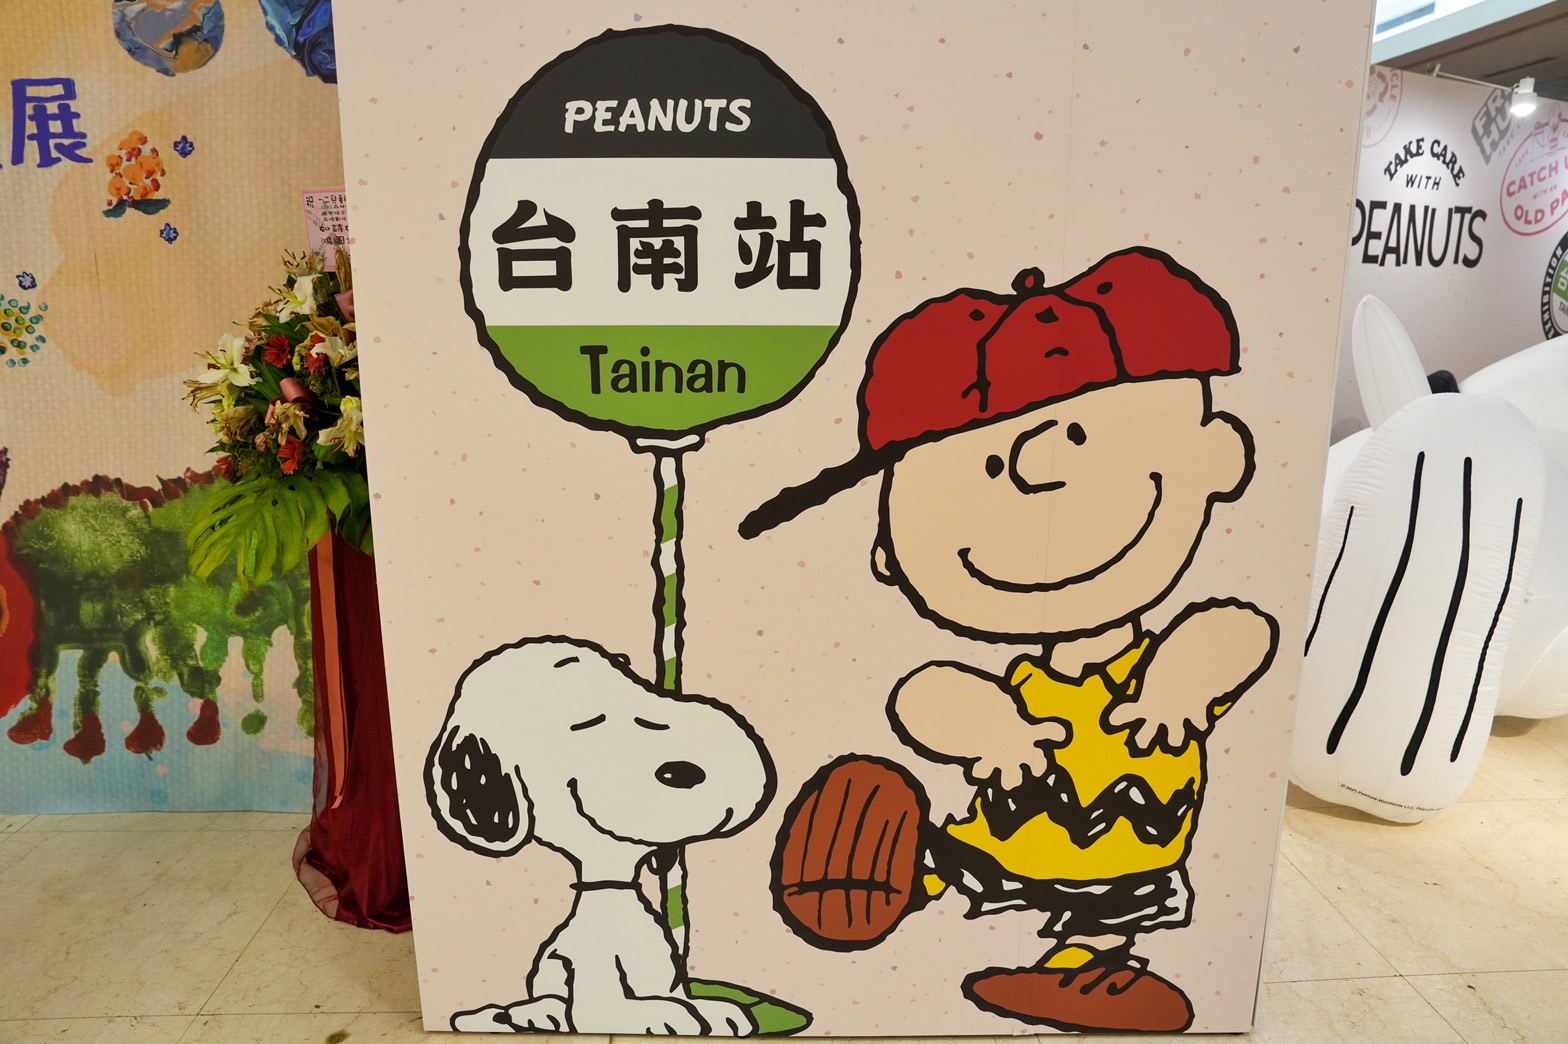 花生漫畫/史努比 關愛巡迴最終場 Take Care with Peanuts